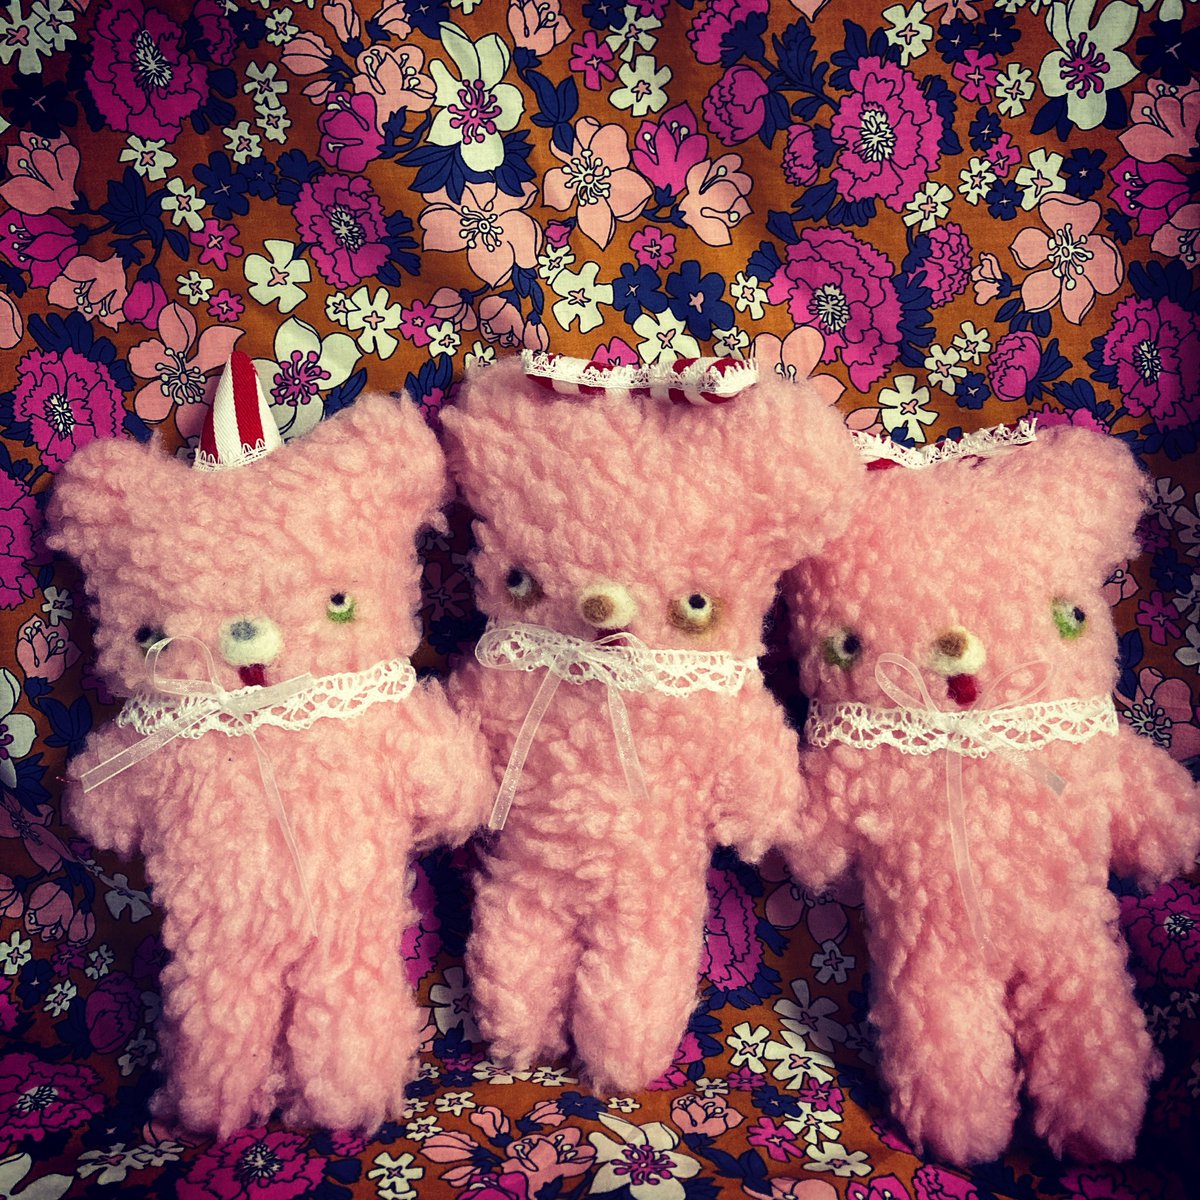 Happy pink bear 
しあわせのピンクのくまちゃん
#BUBUYA  #clothdolls   #beardoll  #pinkbear